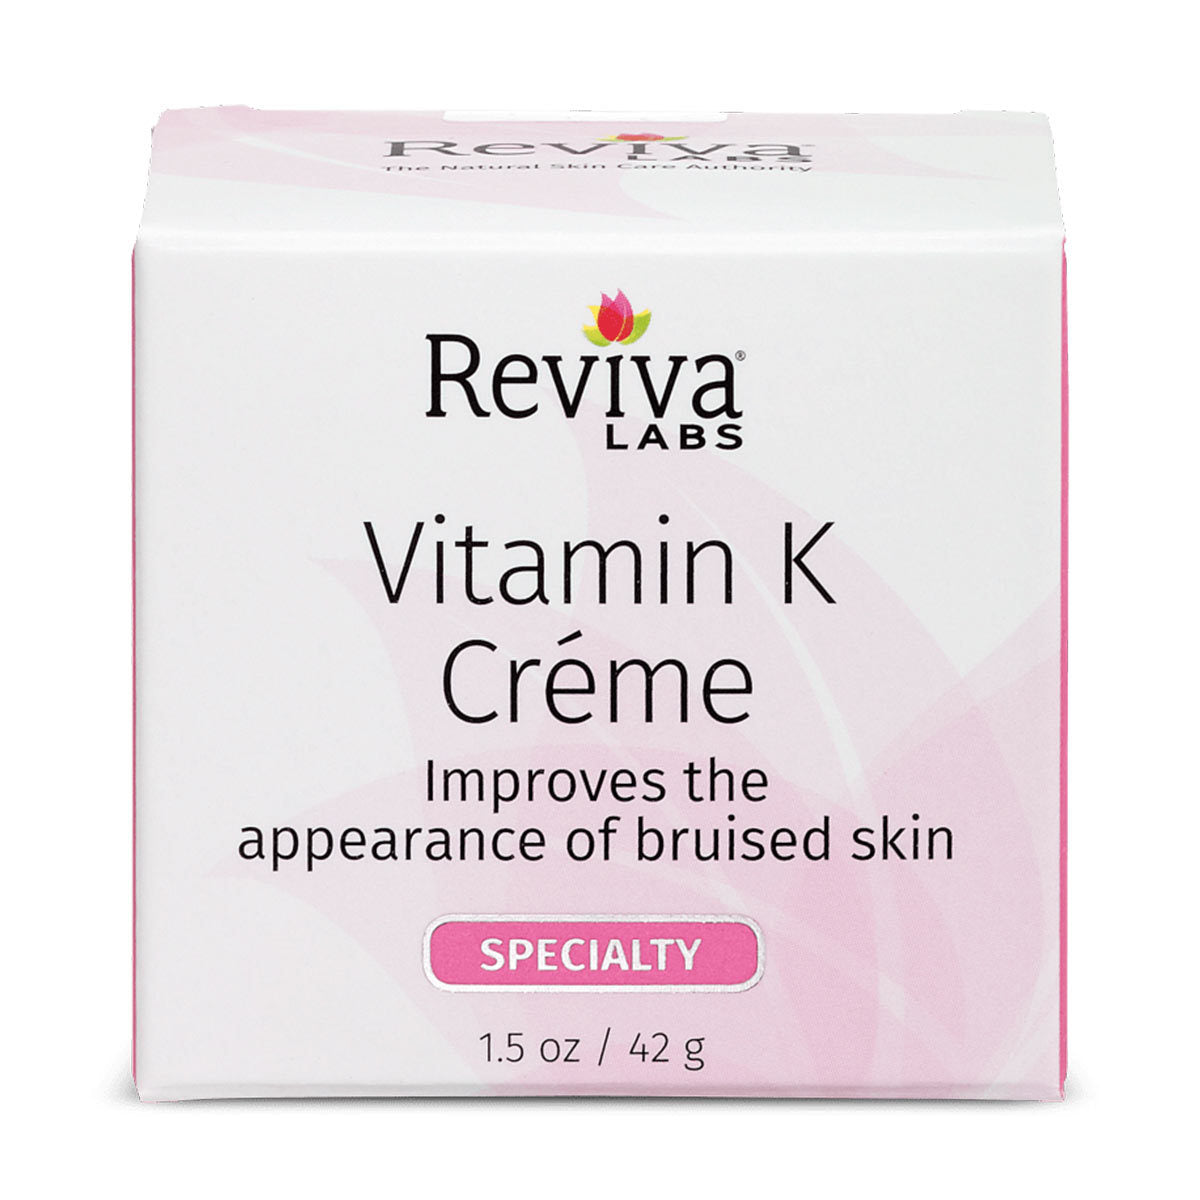 Primary image of Vitamin K Creme